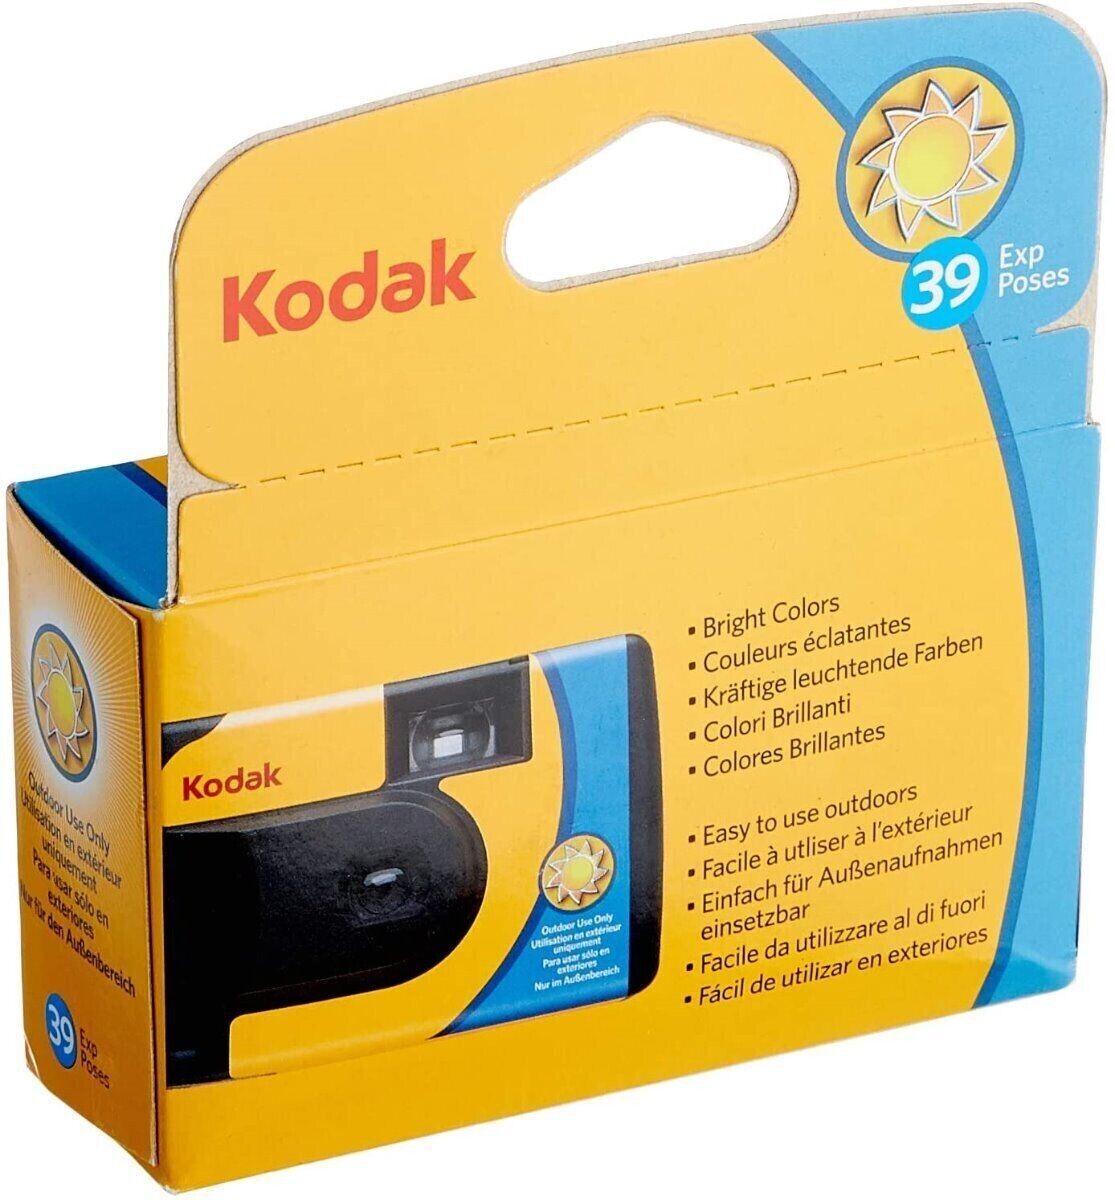 Kodak Daylight Single Use Camera - 39 exposures